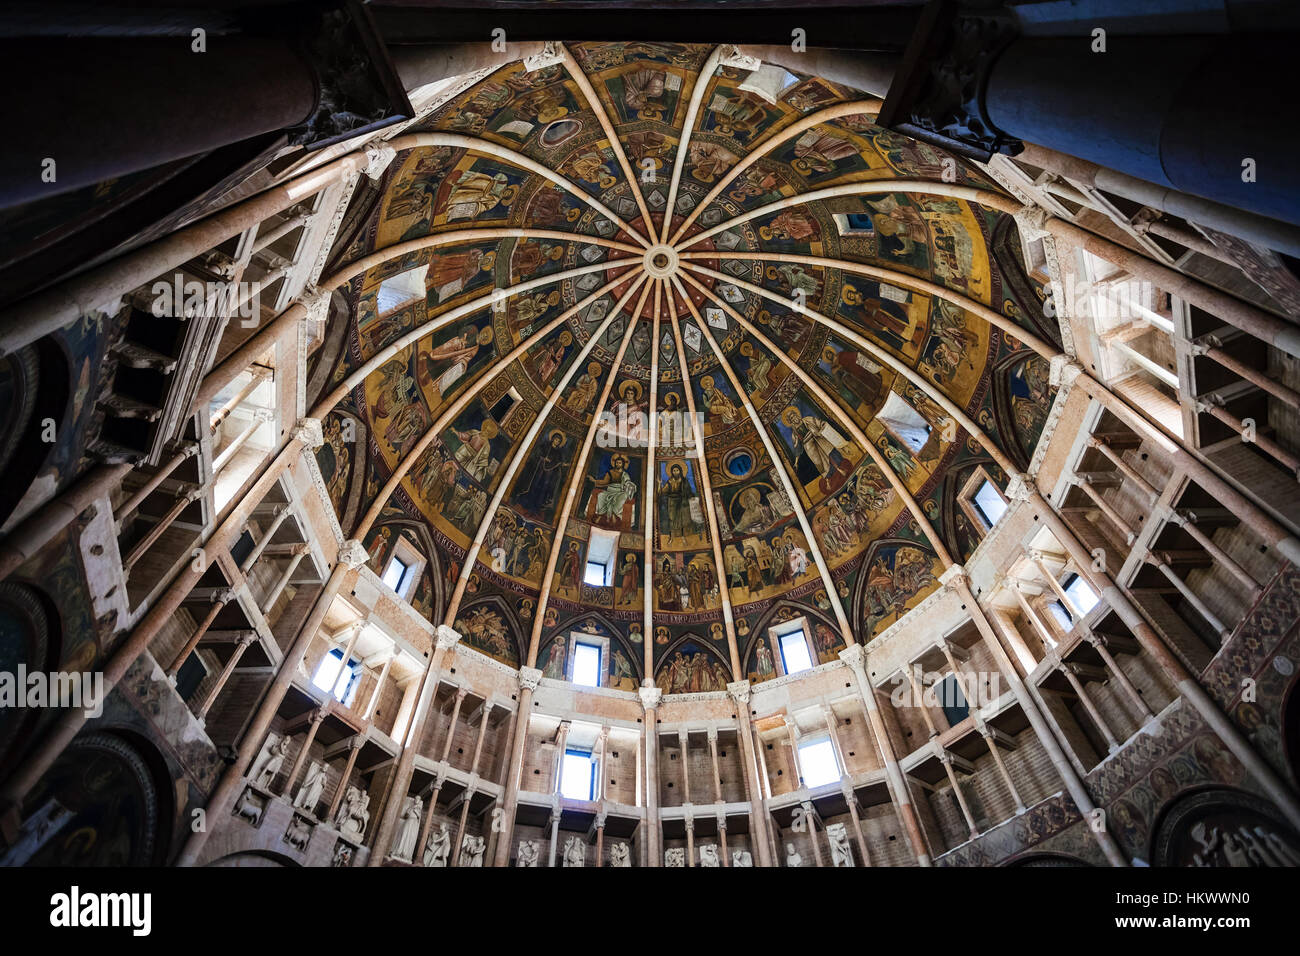 PARMA, Italien - 3. November 2012: Kuppel des Baptisterium in Parma Stadt. Bau des Baptisterium begann 1196 von Antelami. Stockfoto